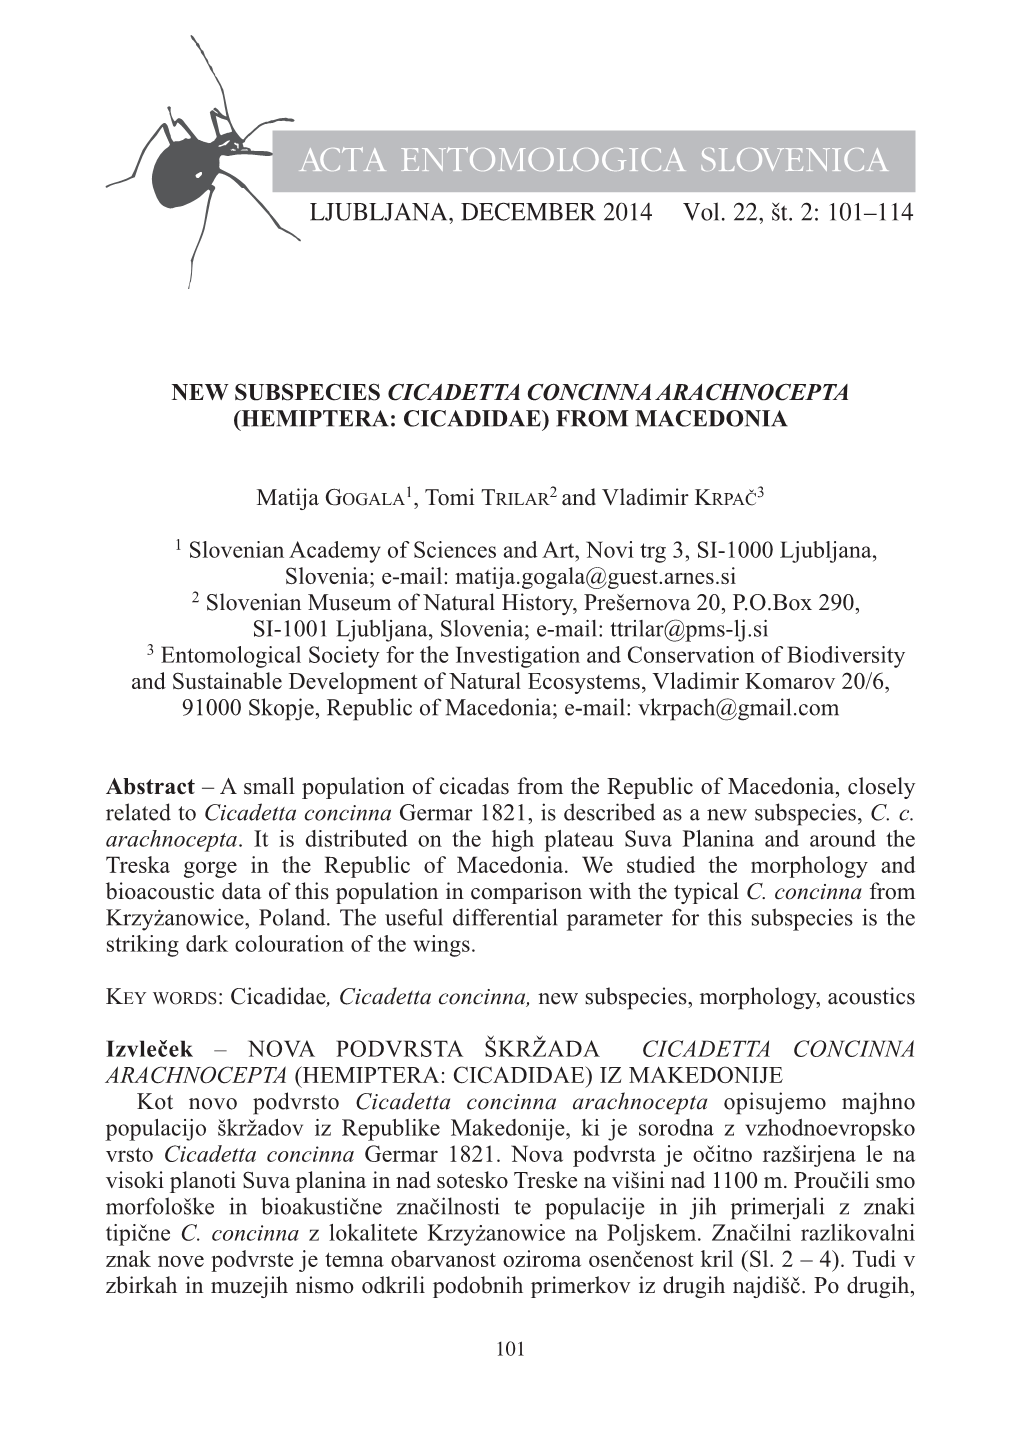 Acta Entomologica Slovenica, 22 (2), 2014 Tudi Bioakustičnih Znakih, Se Makedonska Populacija Ne Razlikuje Bistveno Od Tipične C